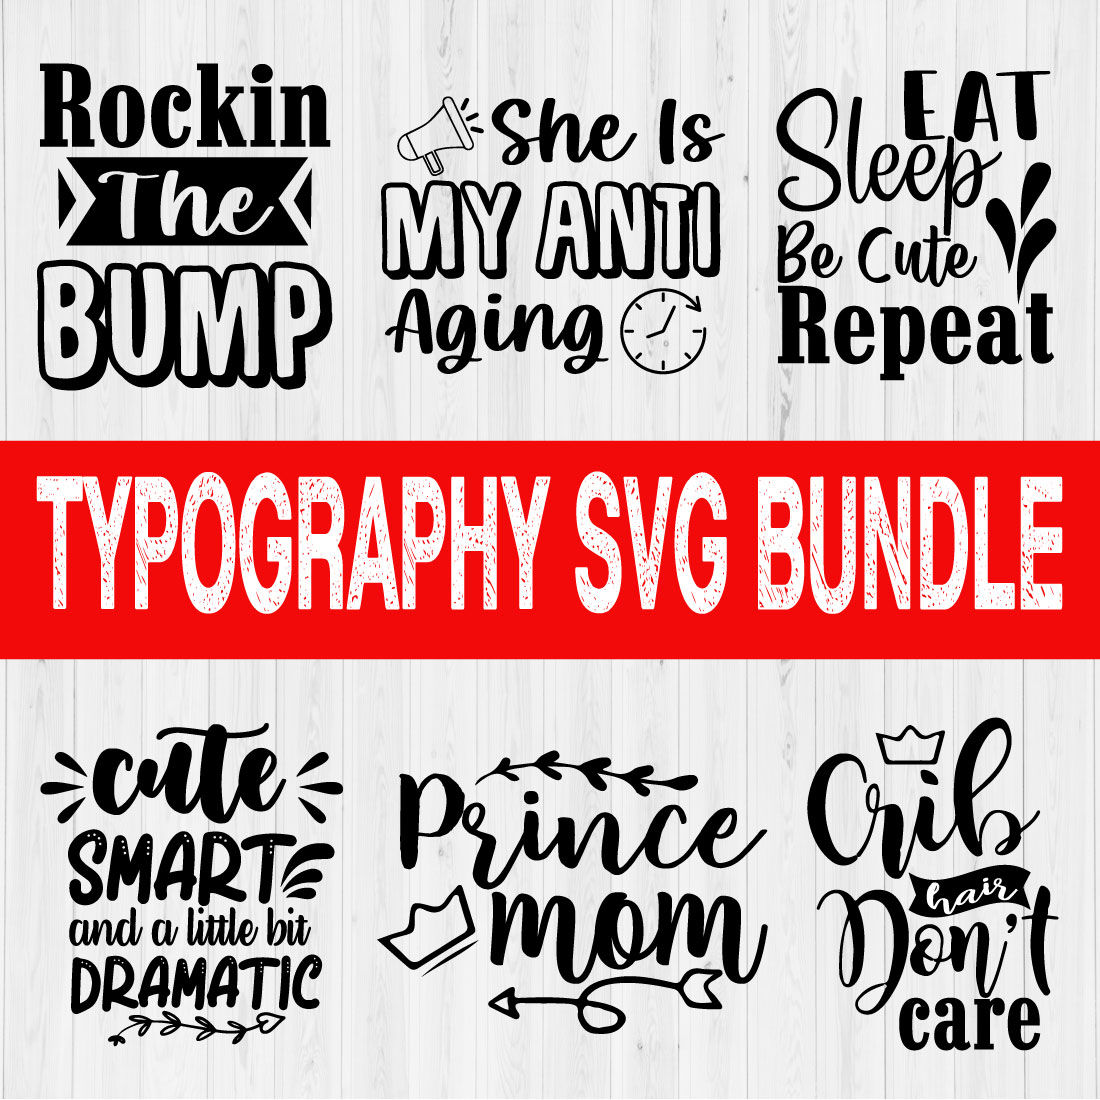 Typography Svg Bundle Vol1 cover image.